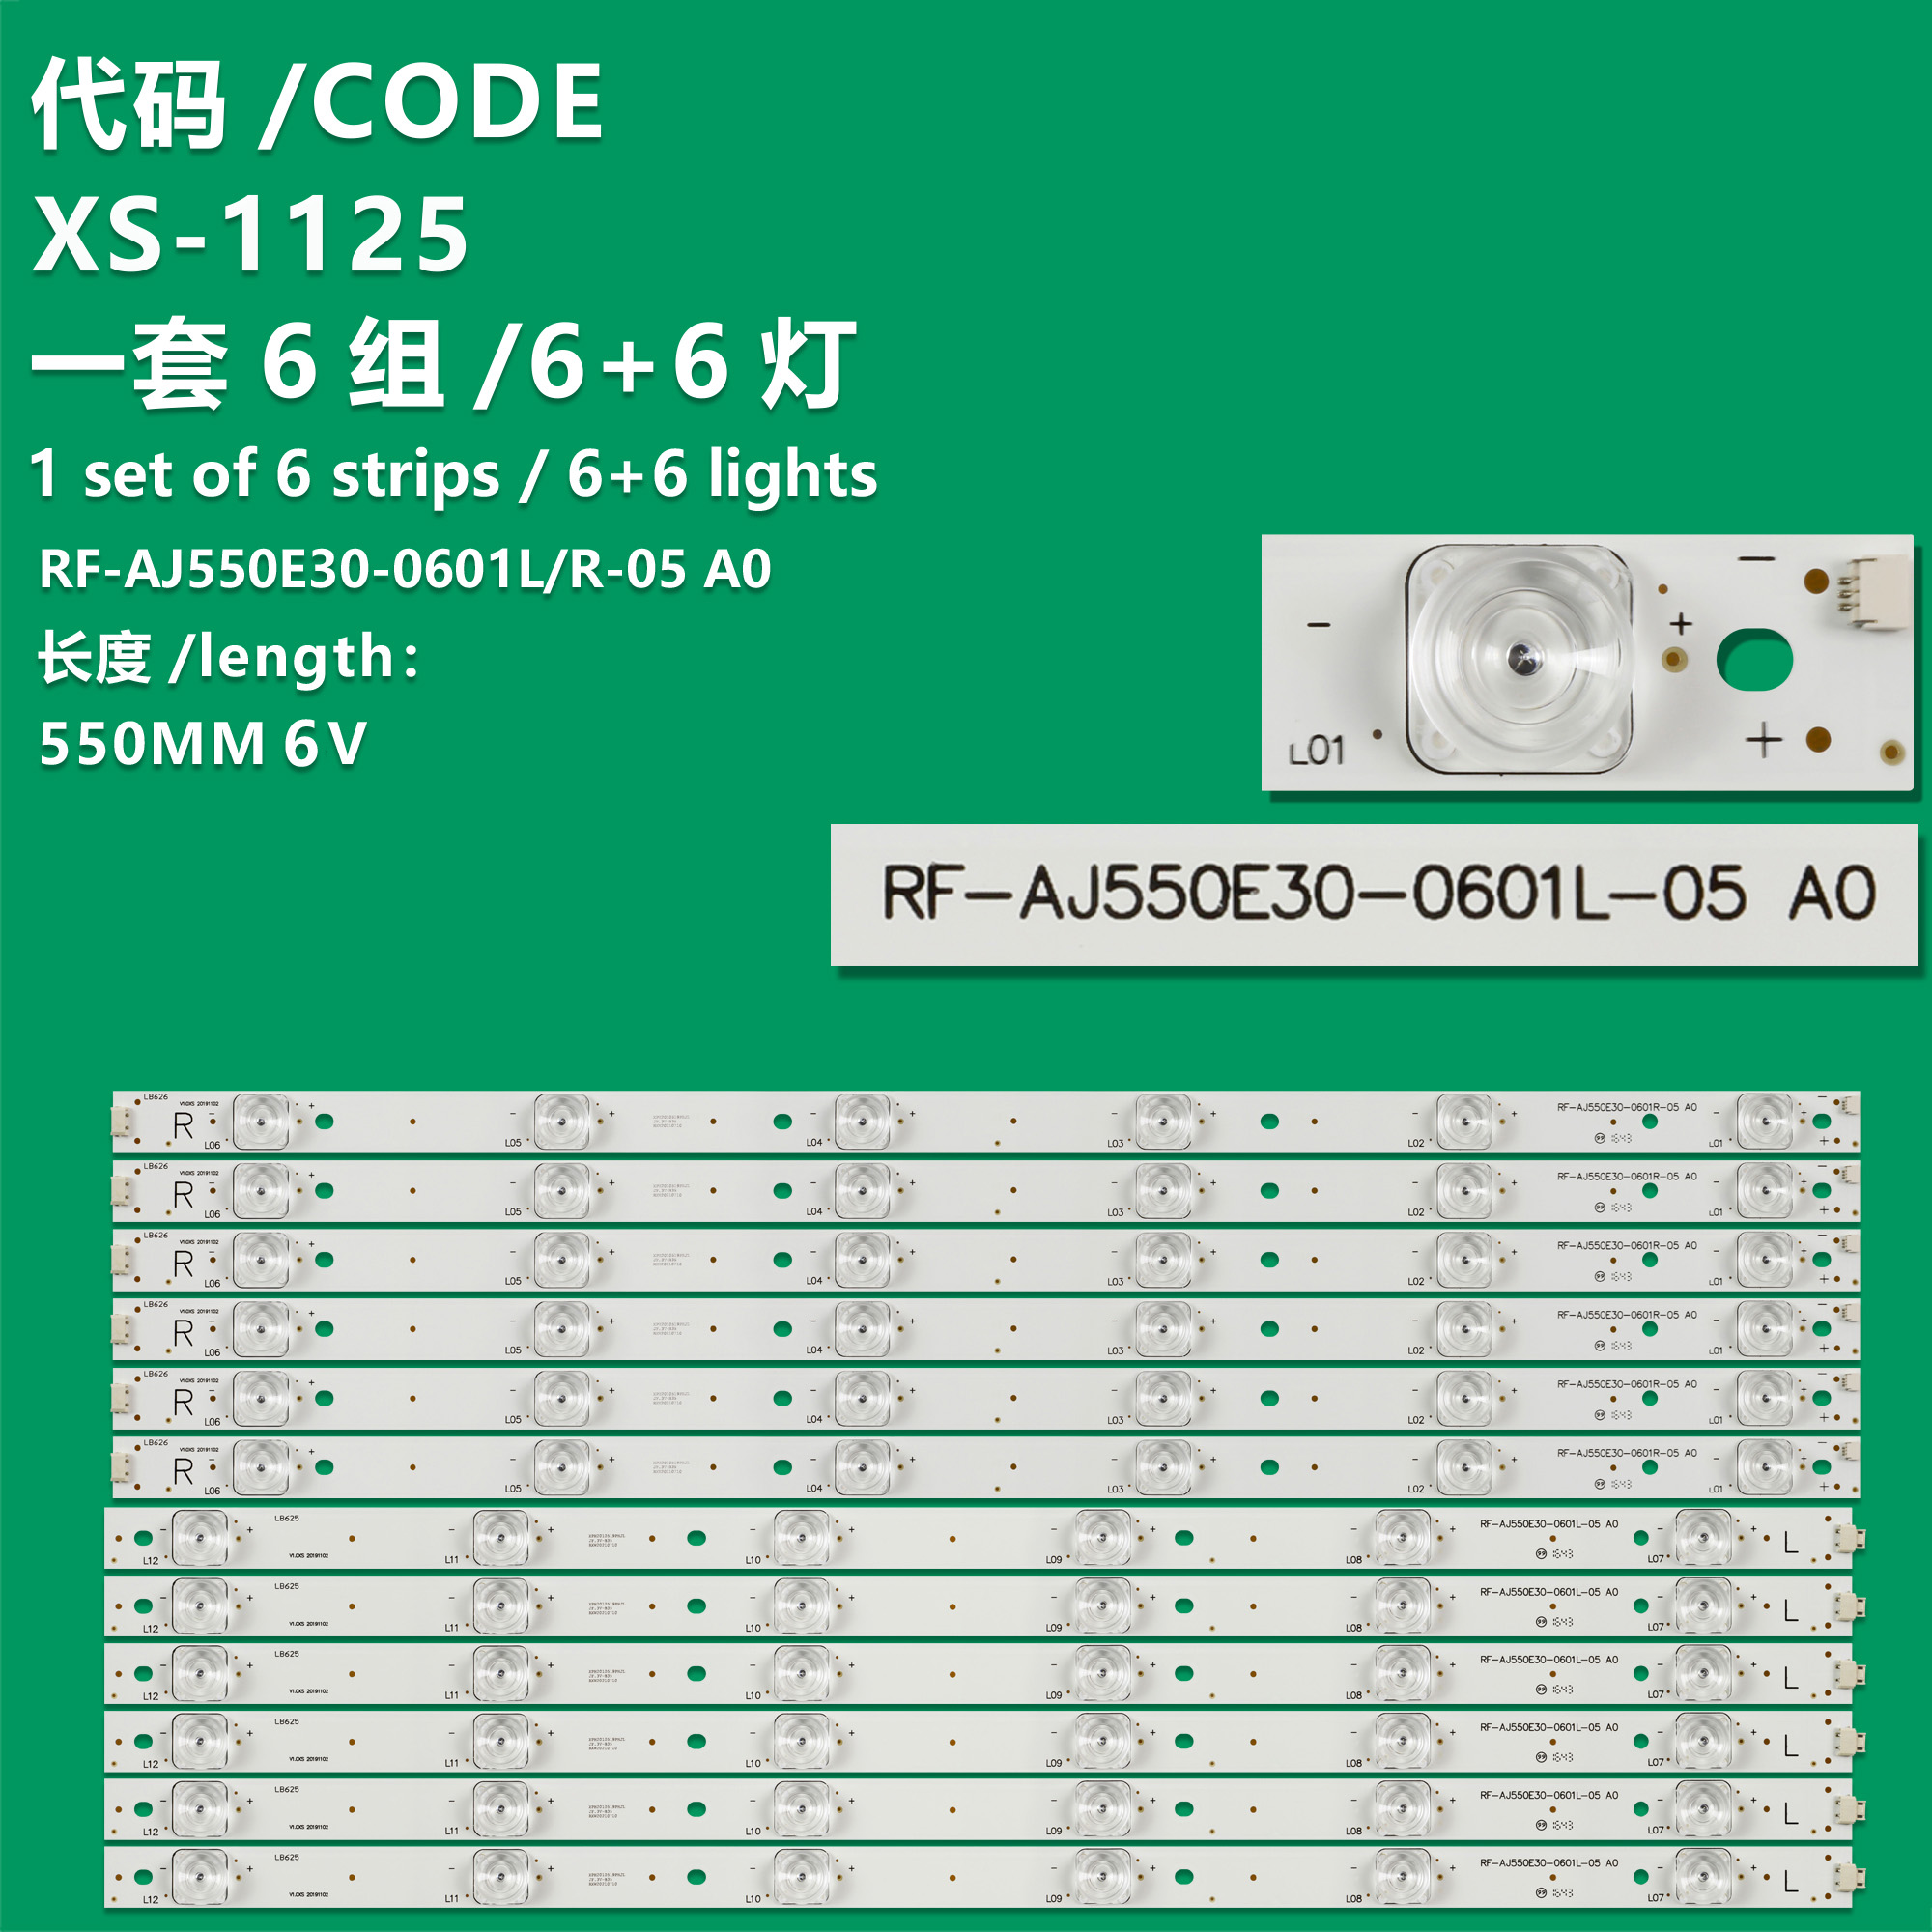 XS-1125 New LCD TV Backlight Strip CRH-P5530300612L675, CRH-P5530300612R675 For Sharp LC-55CUG8361K, LC-55CUG8361KS, LC-55CUG8362K, LC-55CUG8362KS, LC-55CUG8461